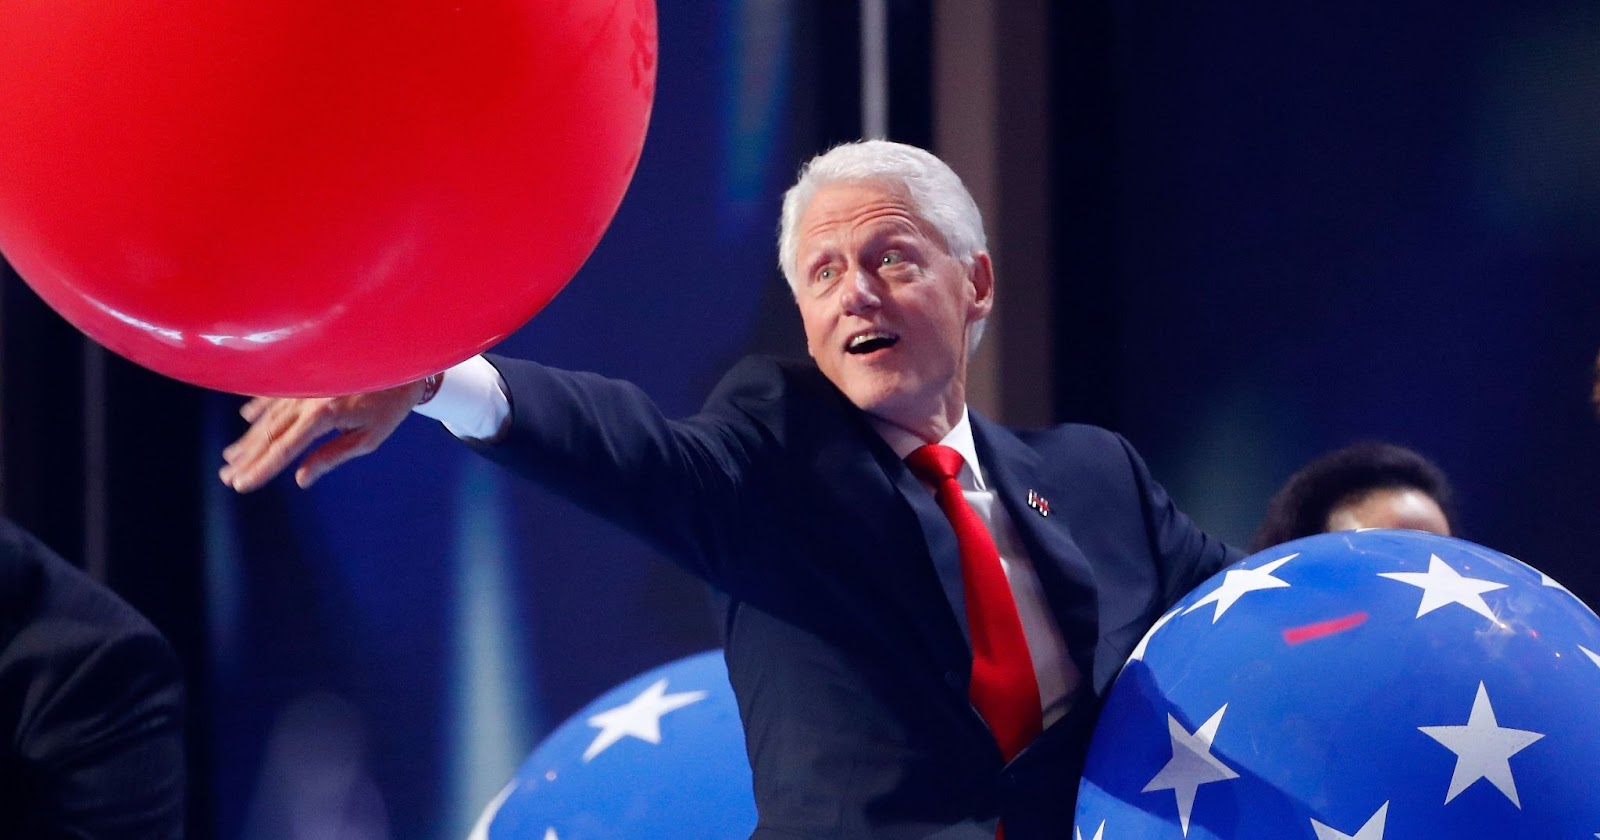 Bill Clinton looking goofy.